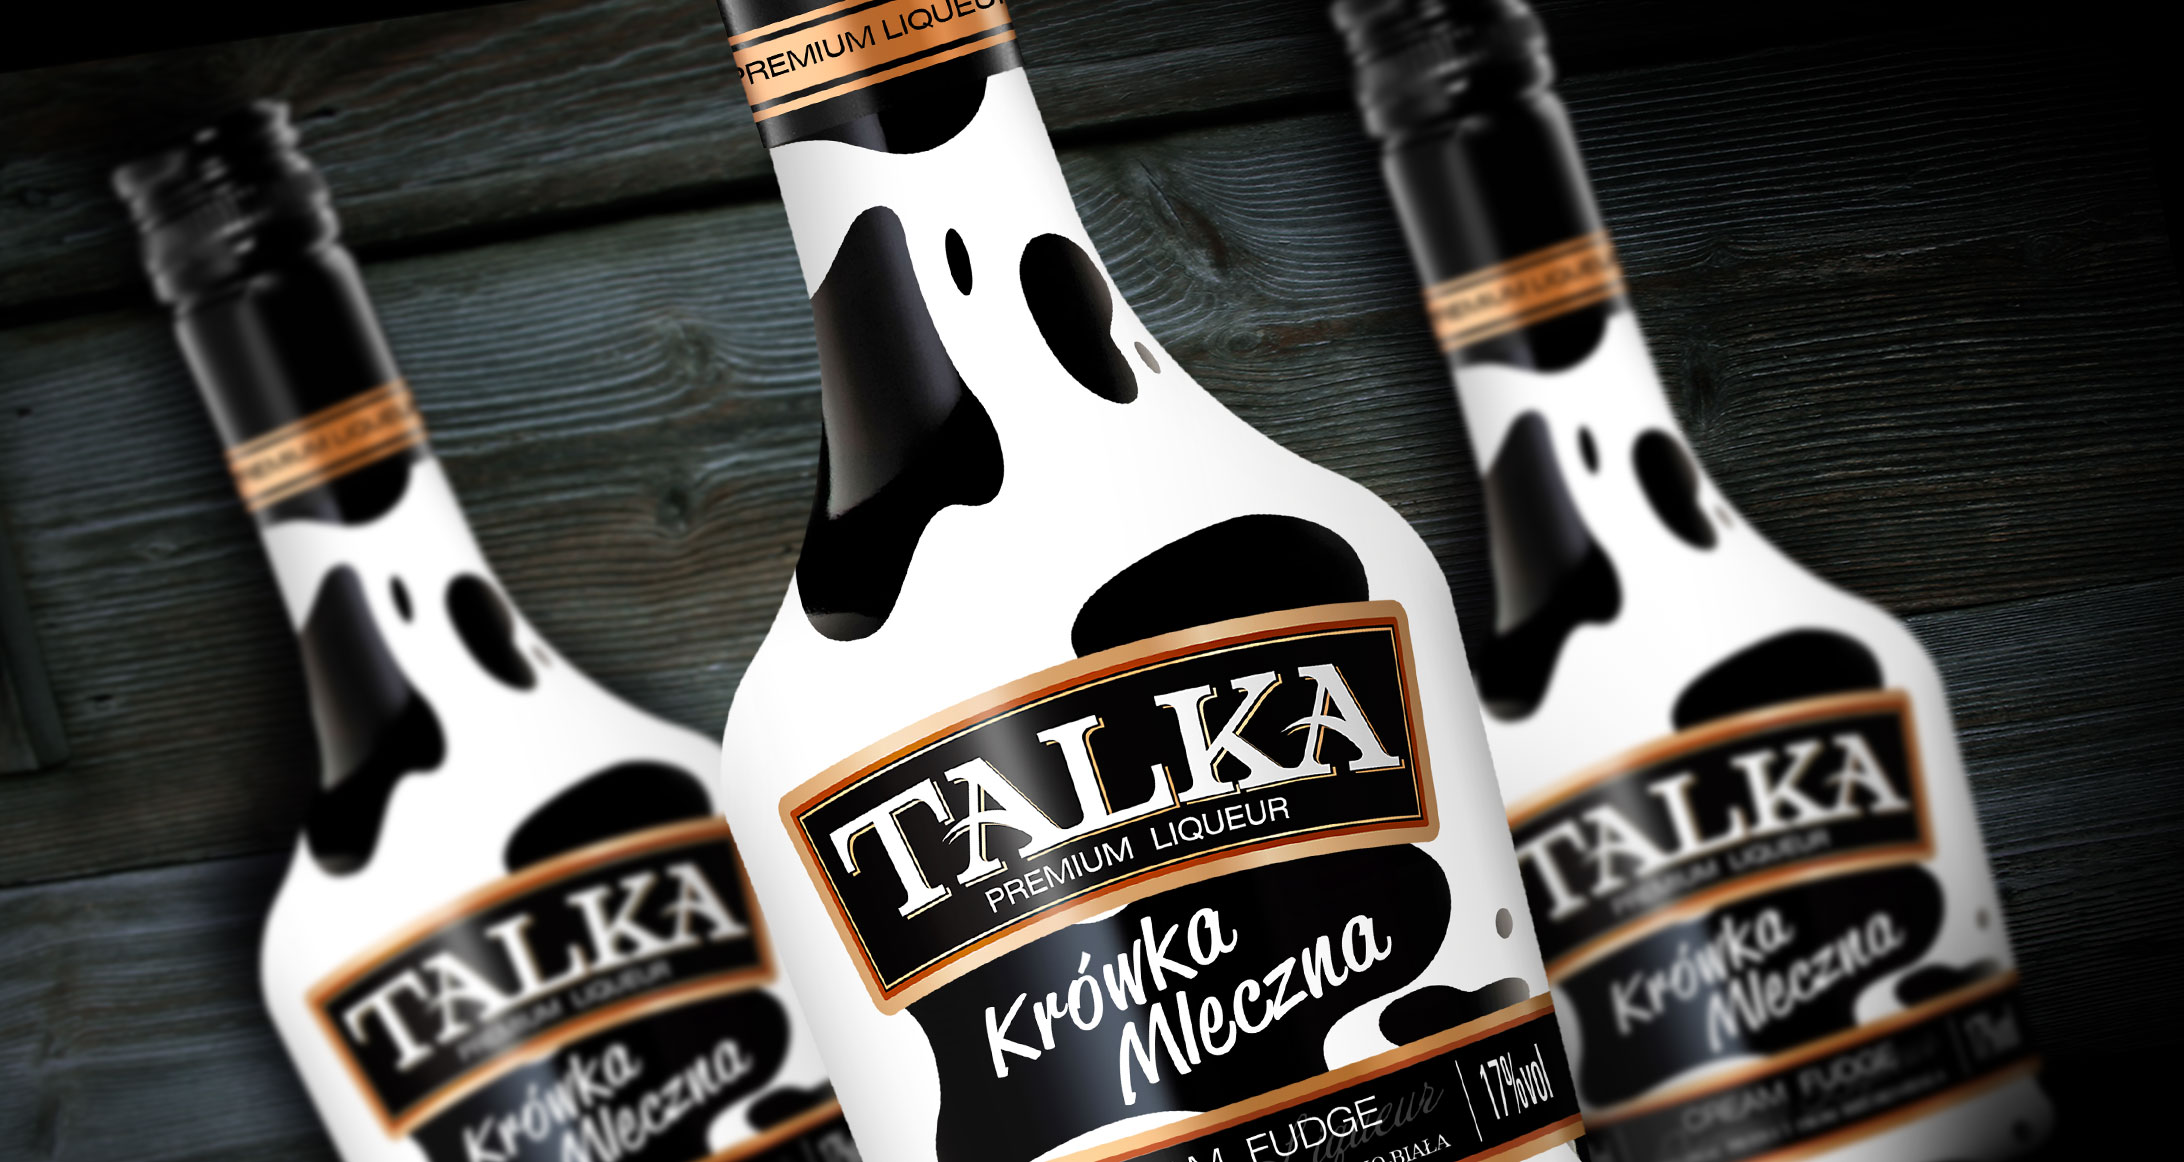 talka liqueur new packaging design